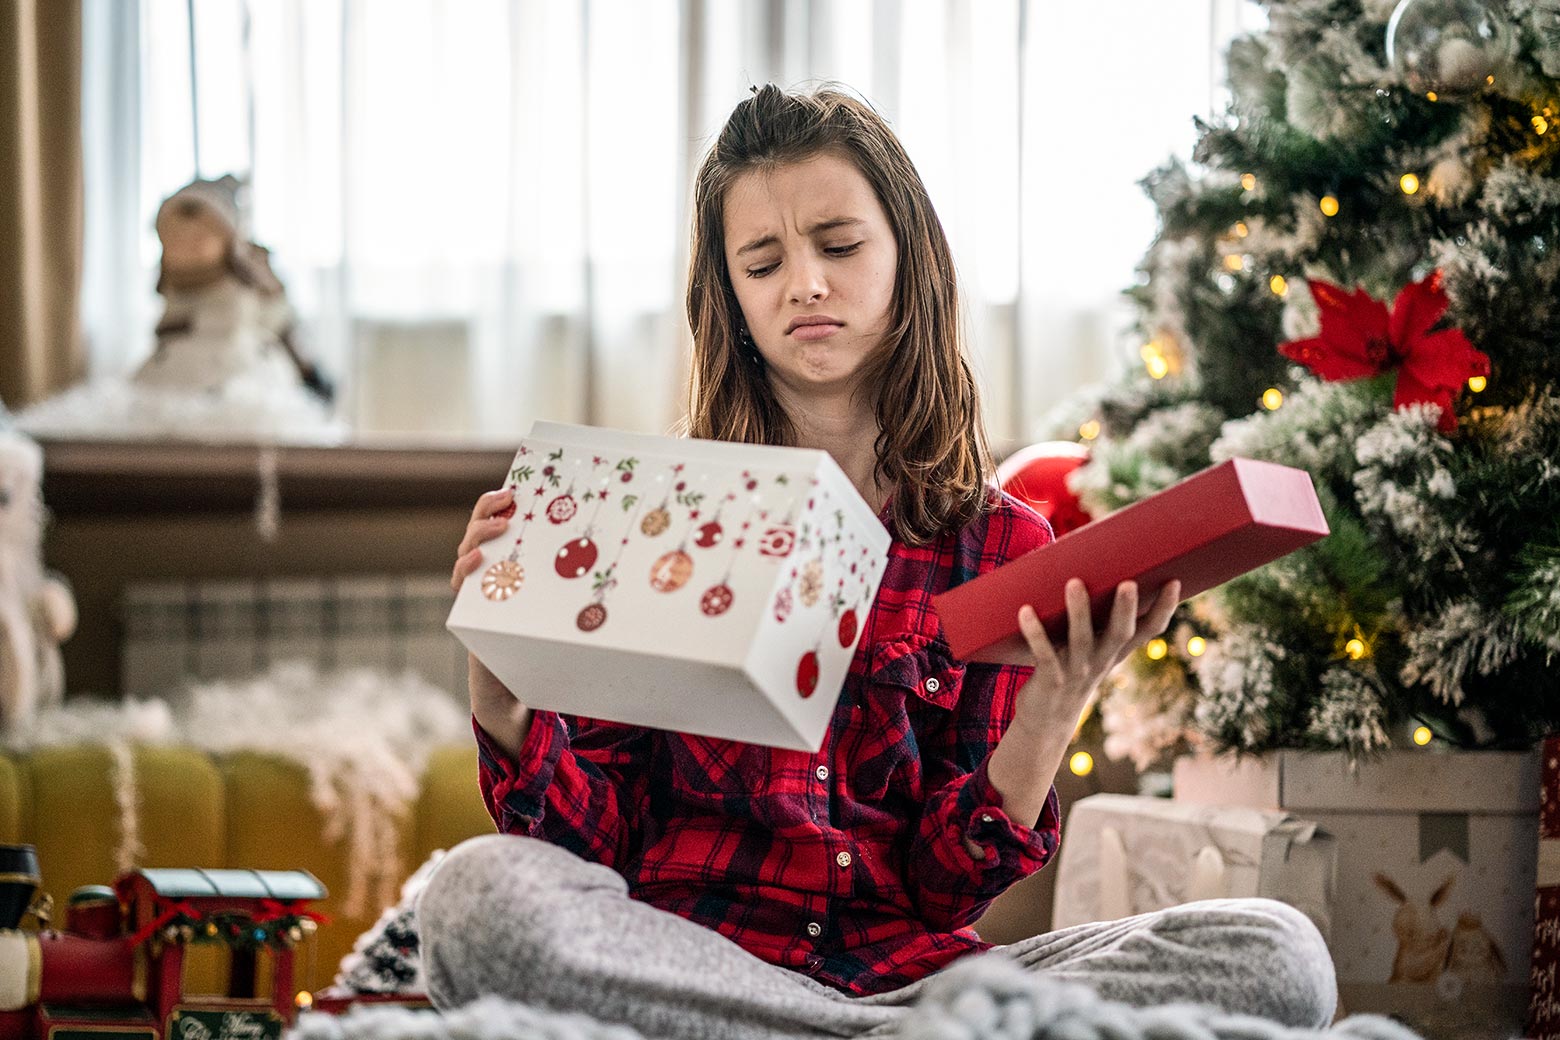 A girl looks skeptically into a Christmas box near a Christmas tree.